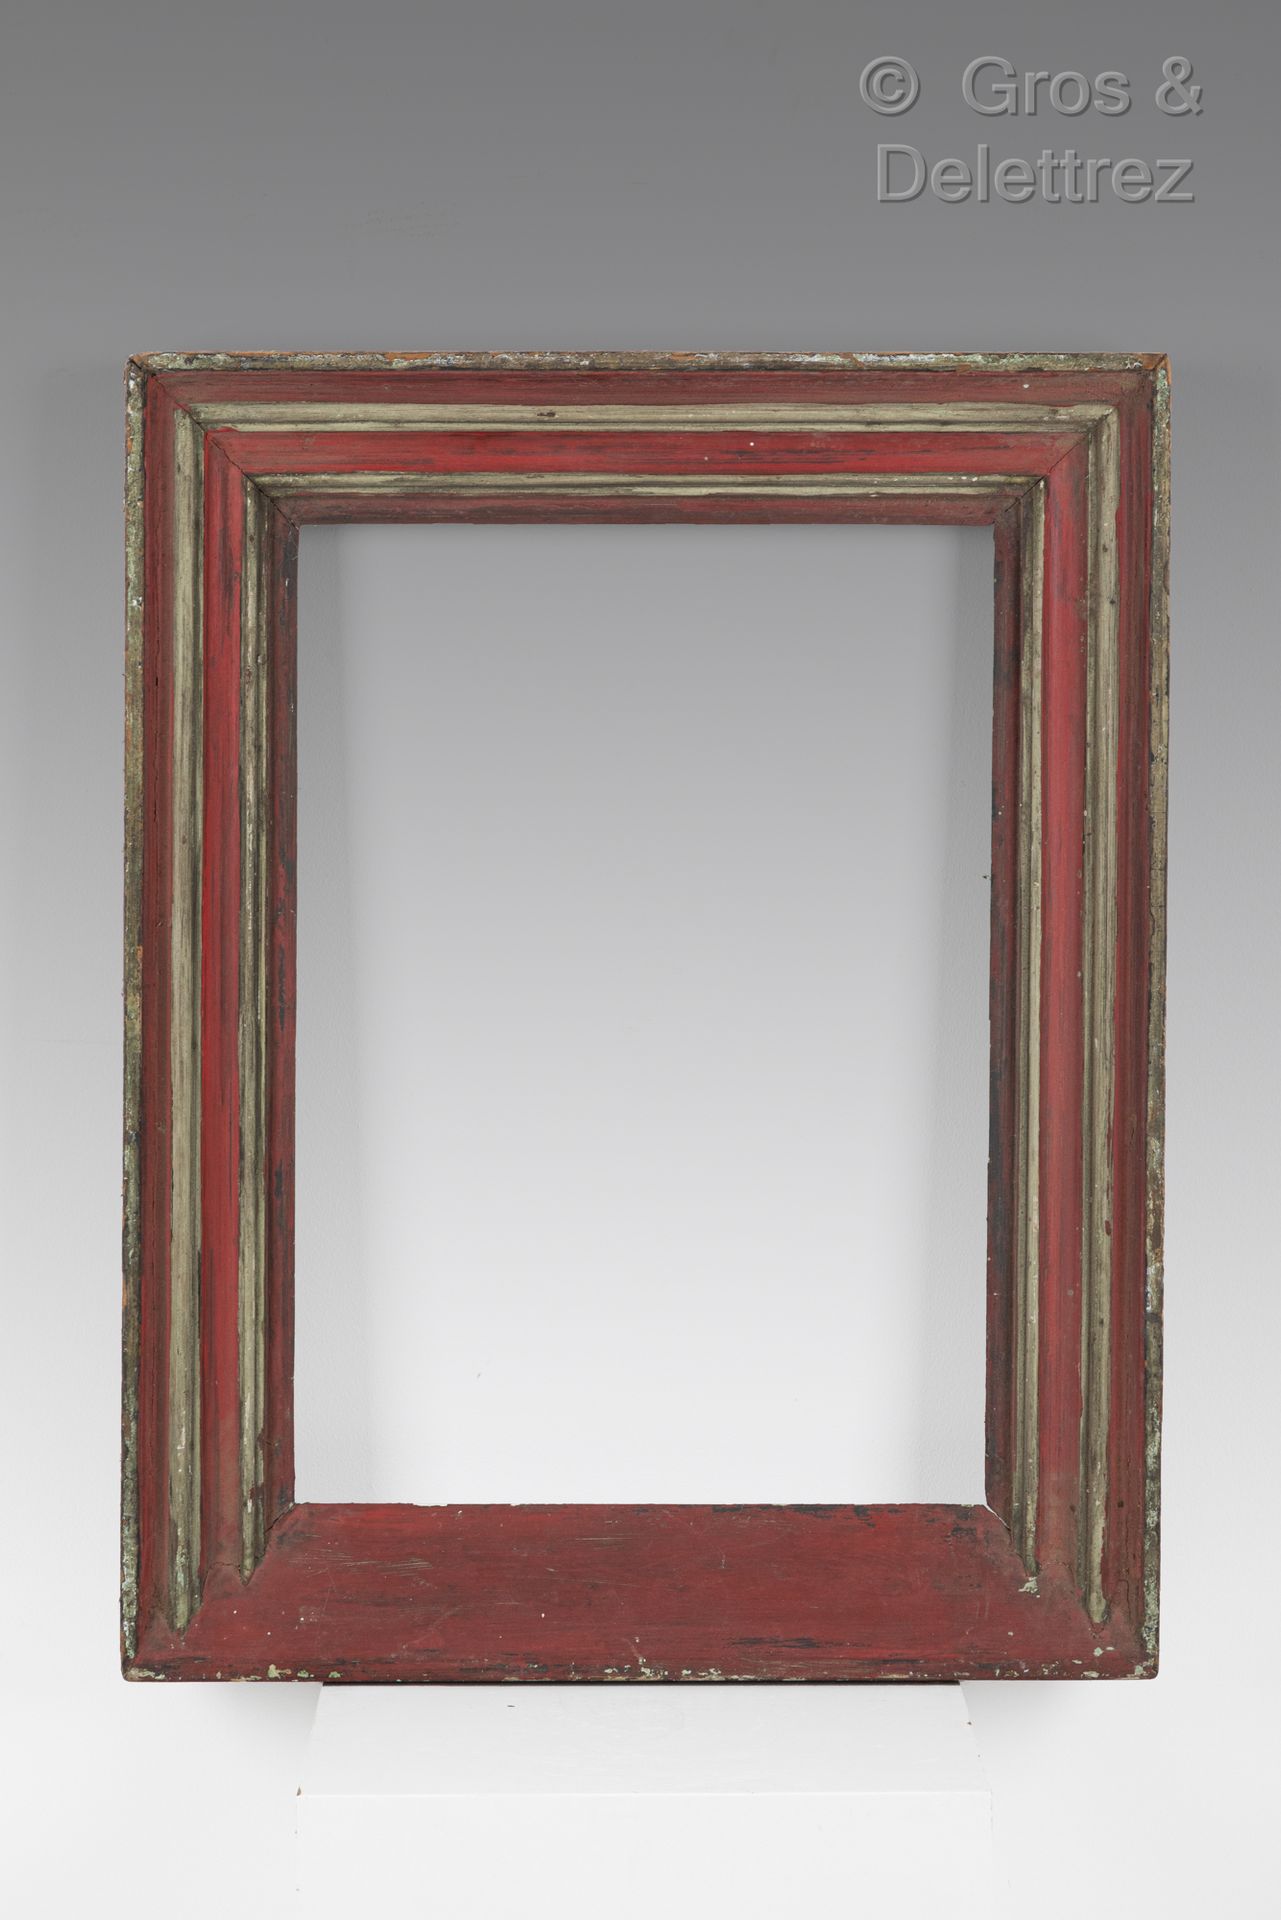 Null 模制和涂漆的木制帐幕框架。

19世纪。

46 x 32.5 x 7.5厘米。